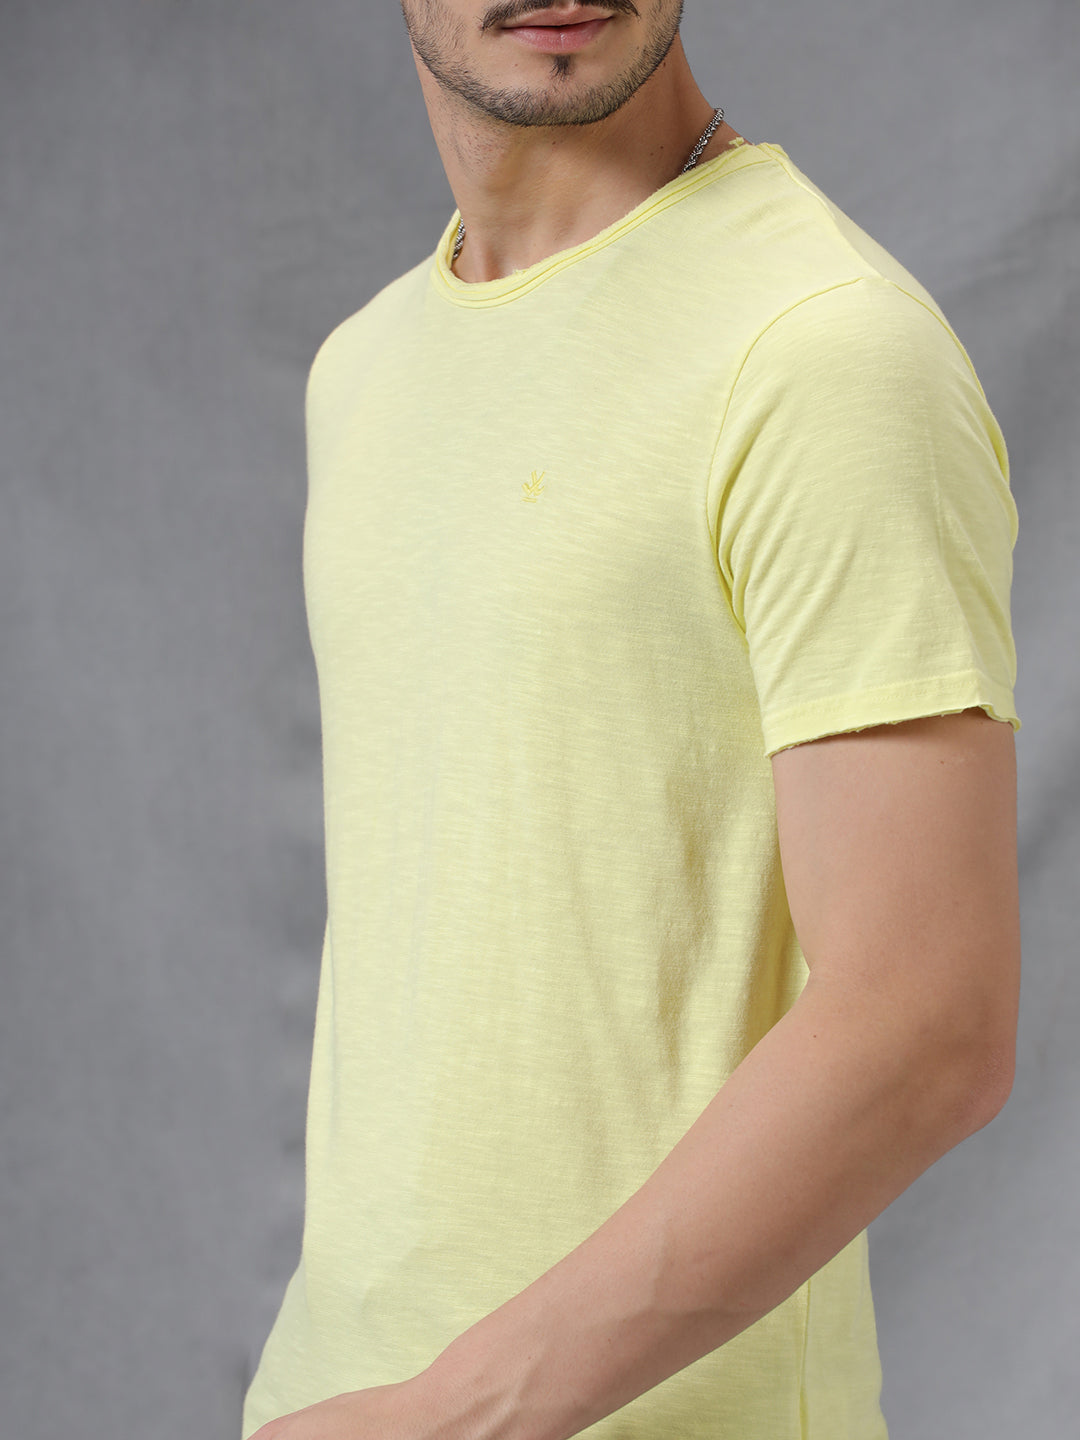 Solid Lemon Crew Neck T-Shirt